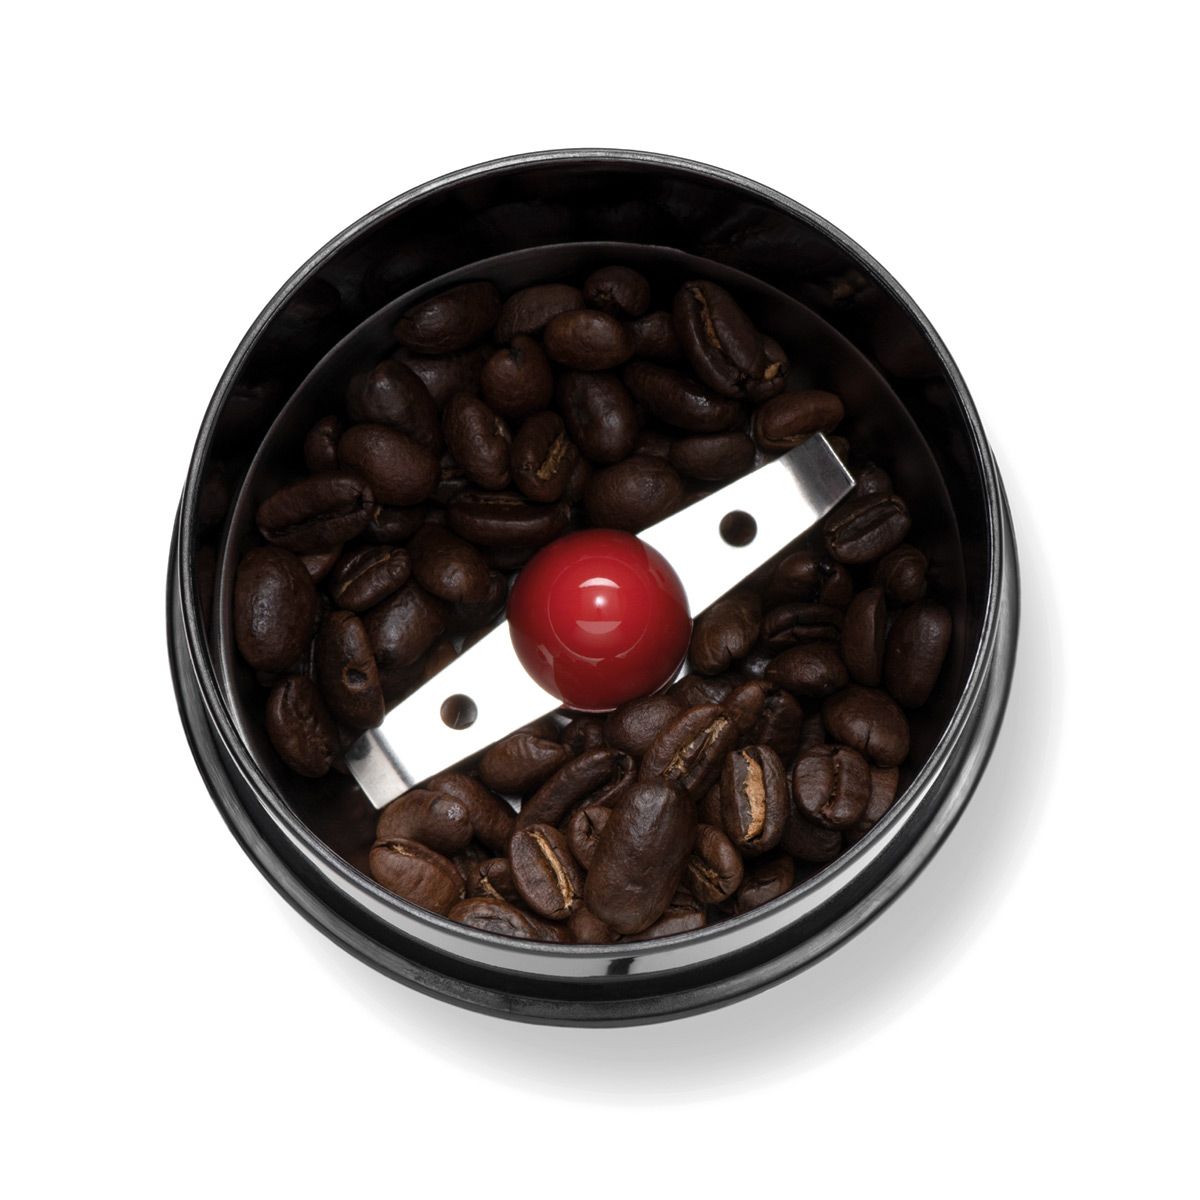 Bodum Bistro Electric Burr Grinder – JSA Coffee Roasting LLC